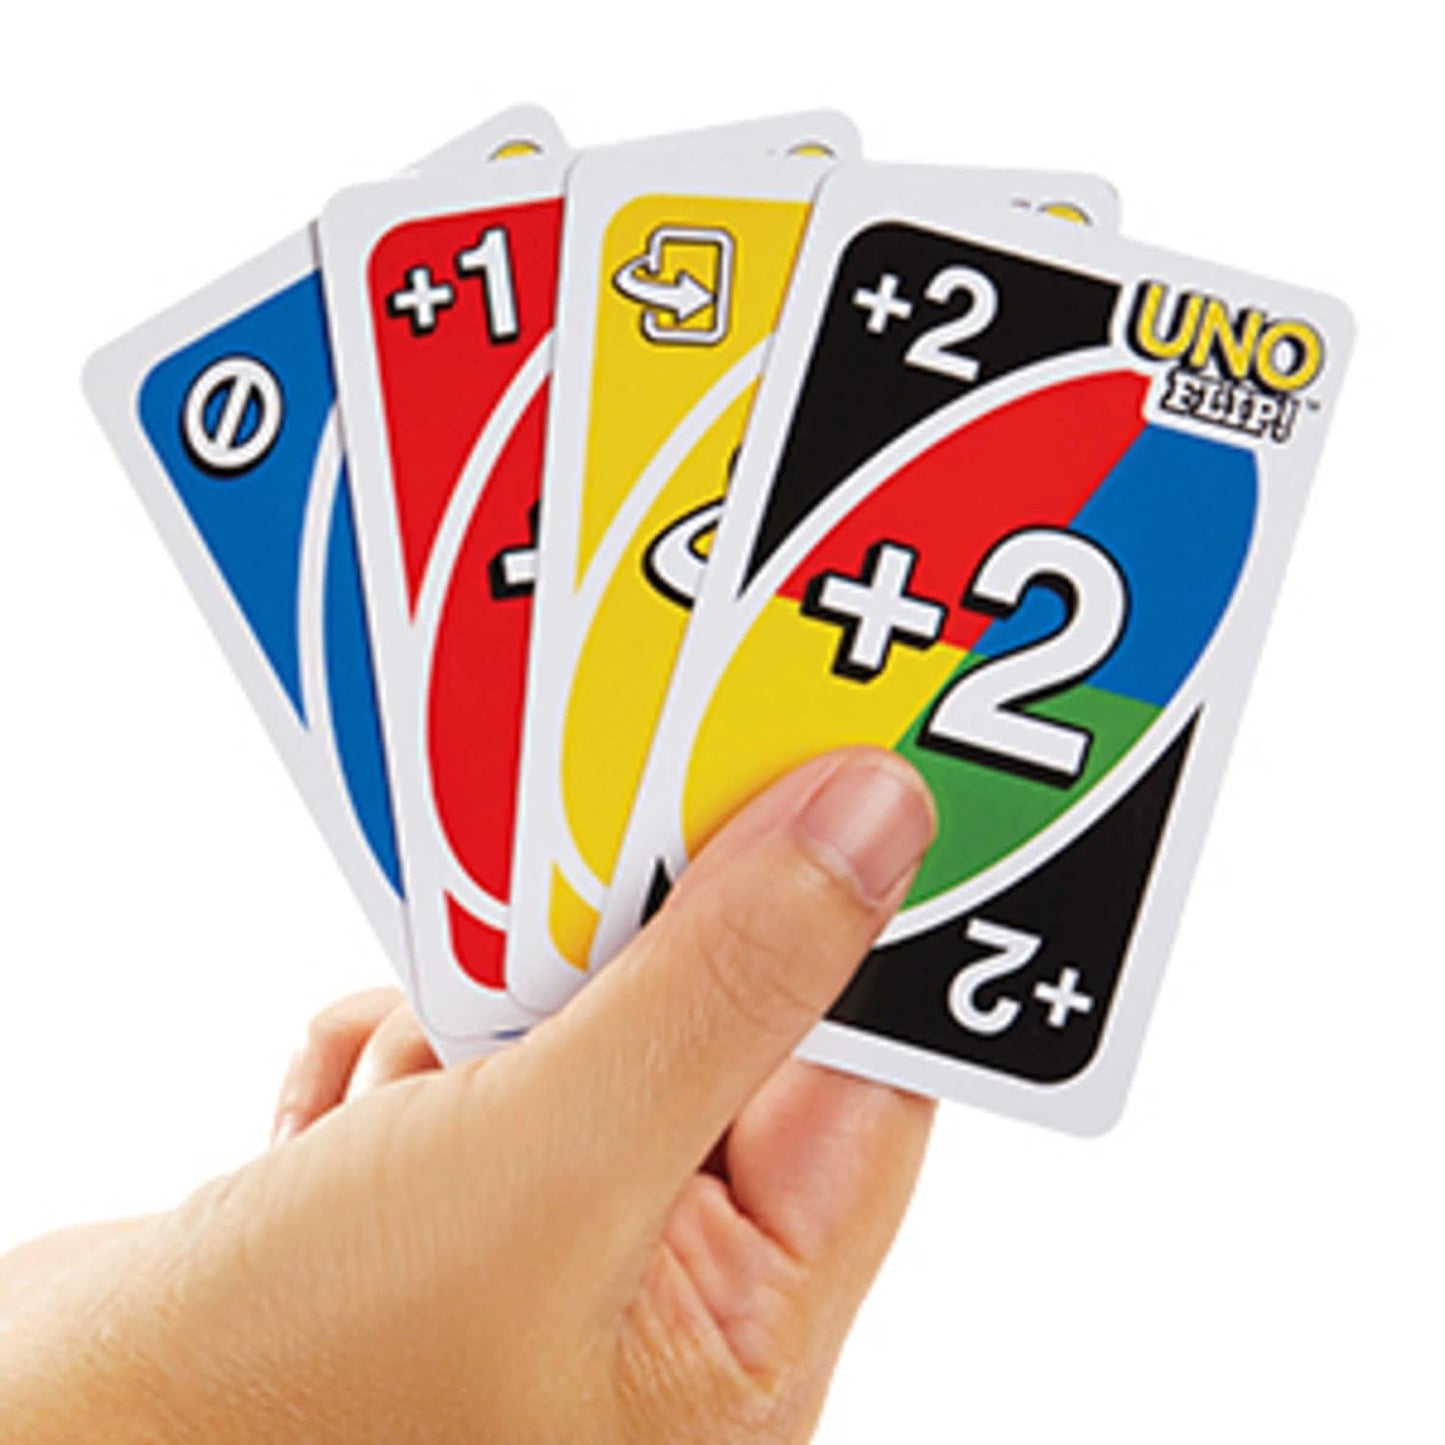 AMKAY Mattel Games Uno Flip Side Card Game, Multi color